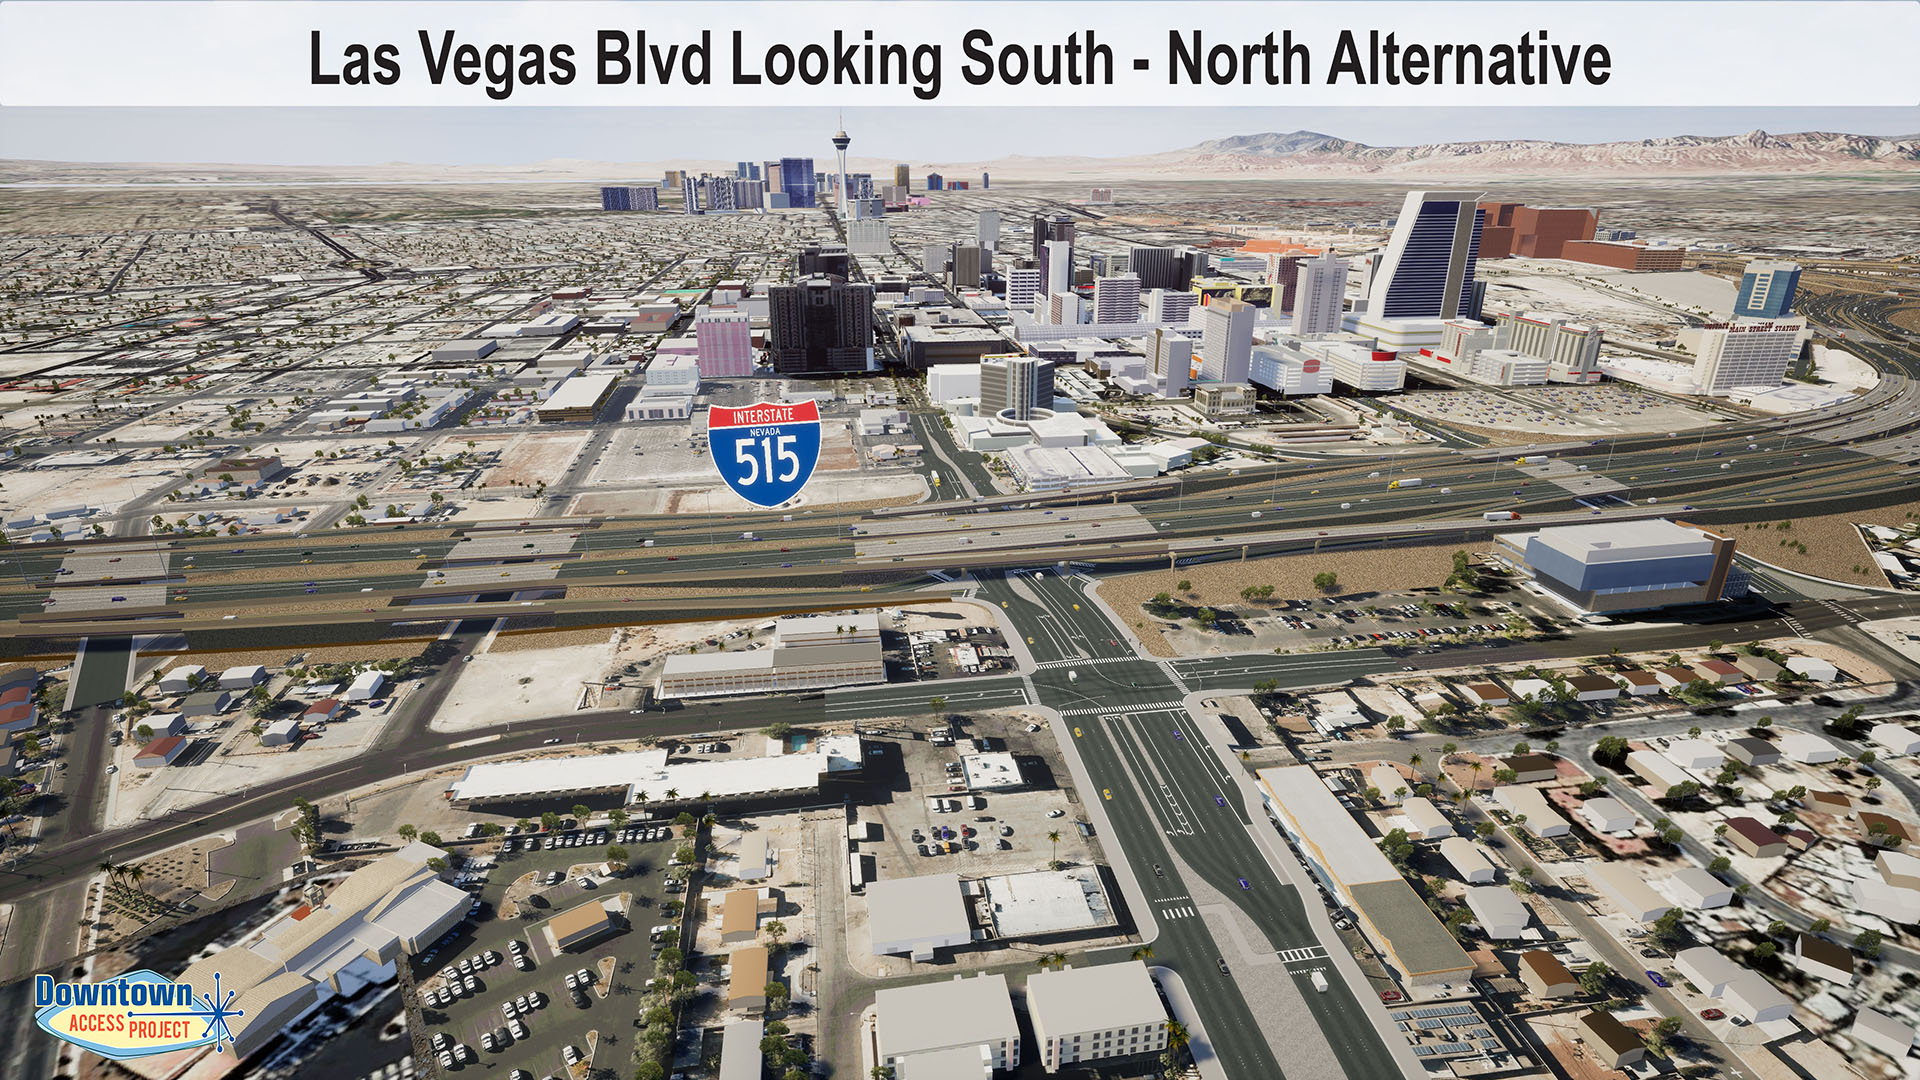 Las Vegas Blvd Looking South - North Alternative